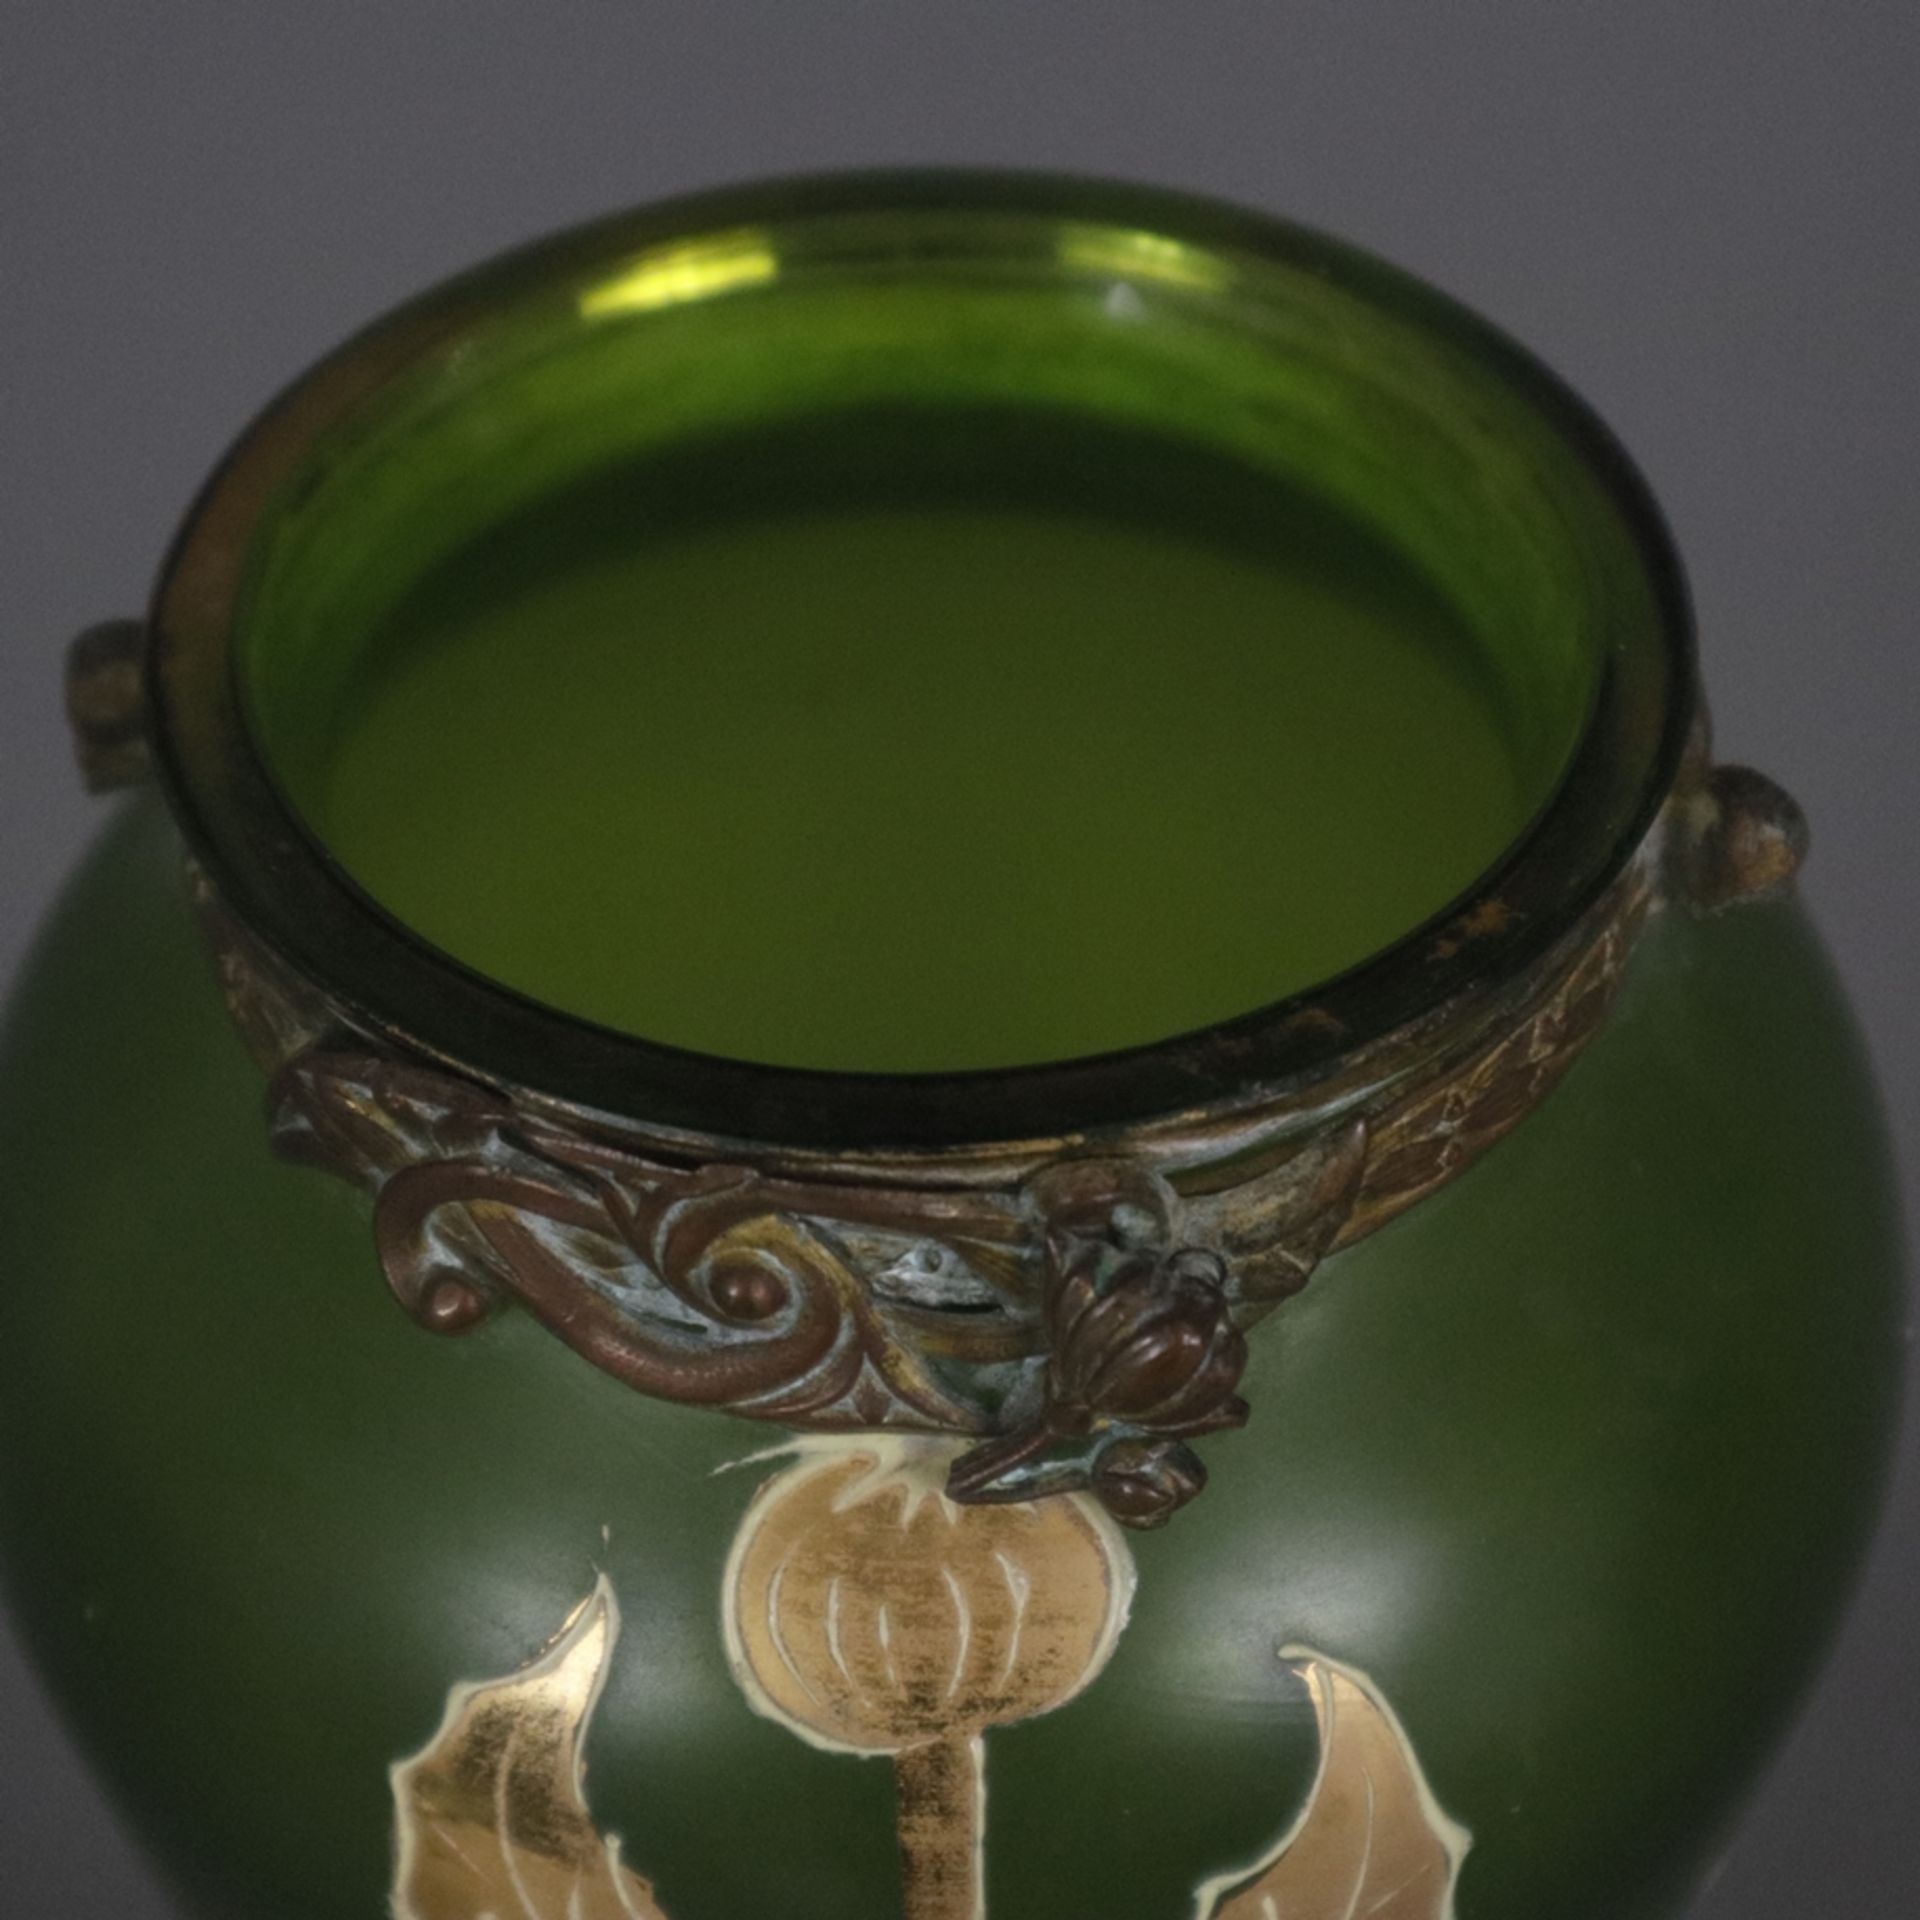 Jugendstil-Glasvase mit Metallmontur - wohl Frankreich um 1900, Klarglas mit grünem Unterfang, scha - Image 3 of 8